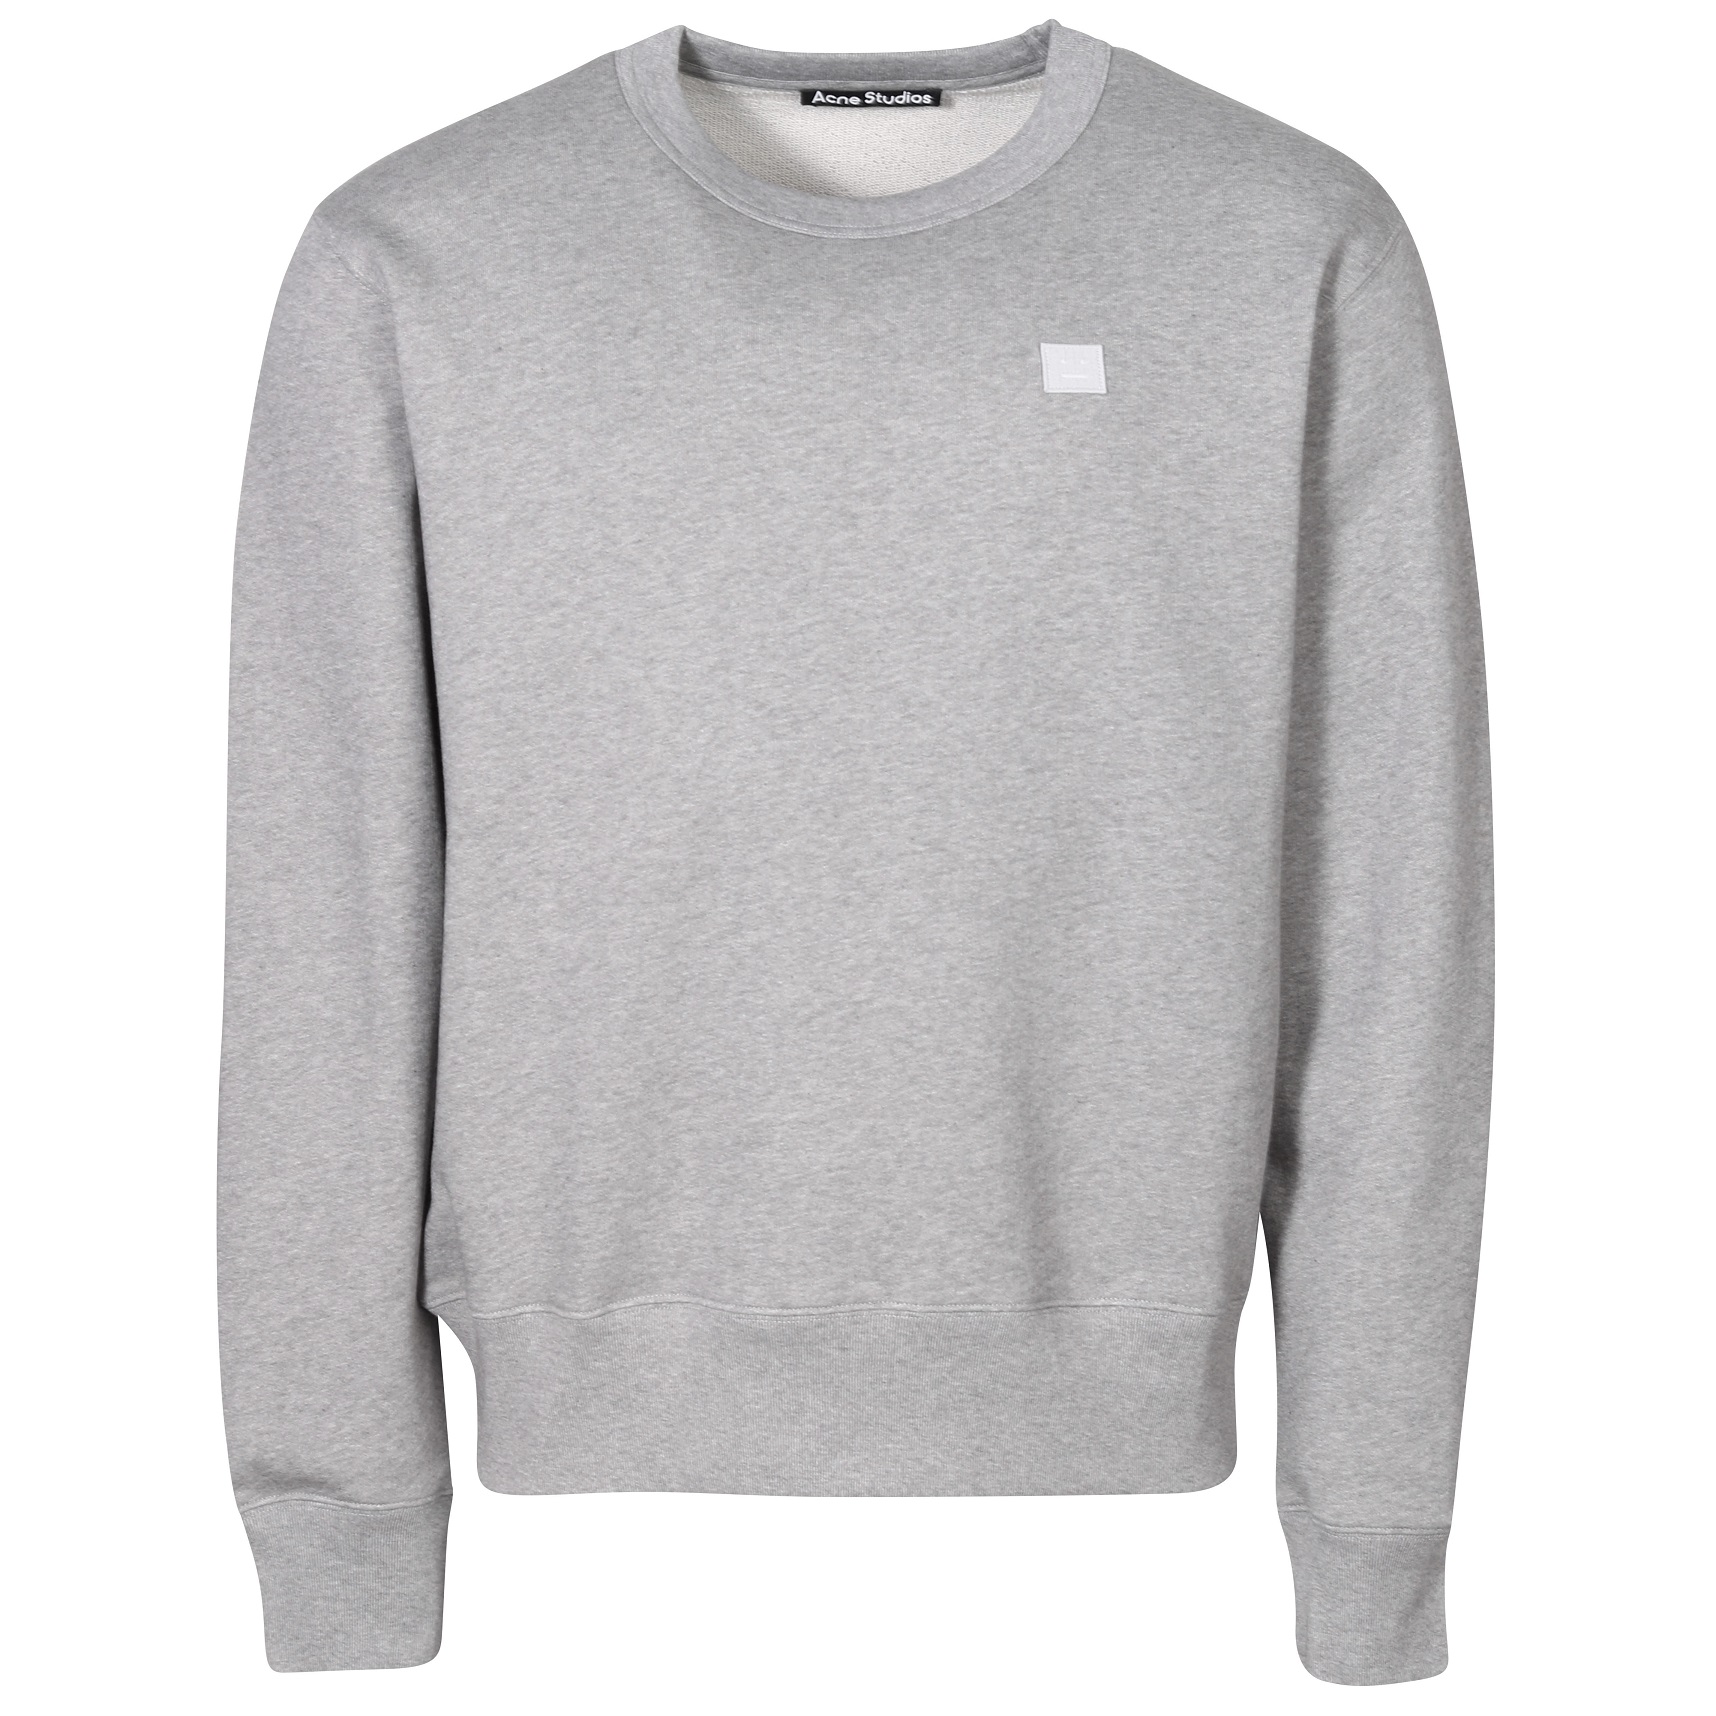 ACNE STUDIOS Unisex Regular Face Sweatshirt in Light Grey Melange